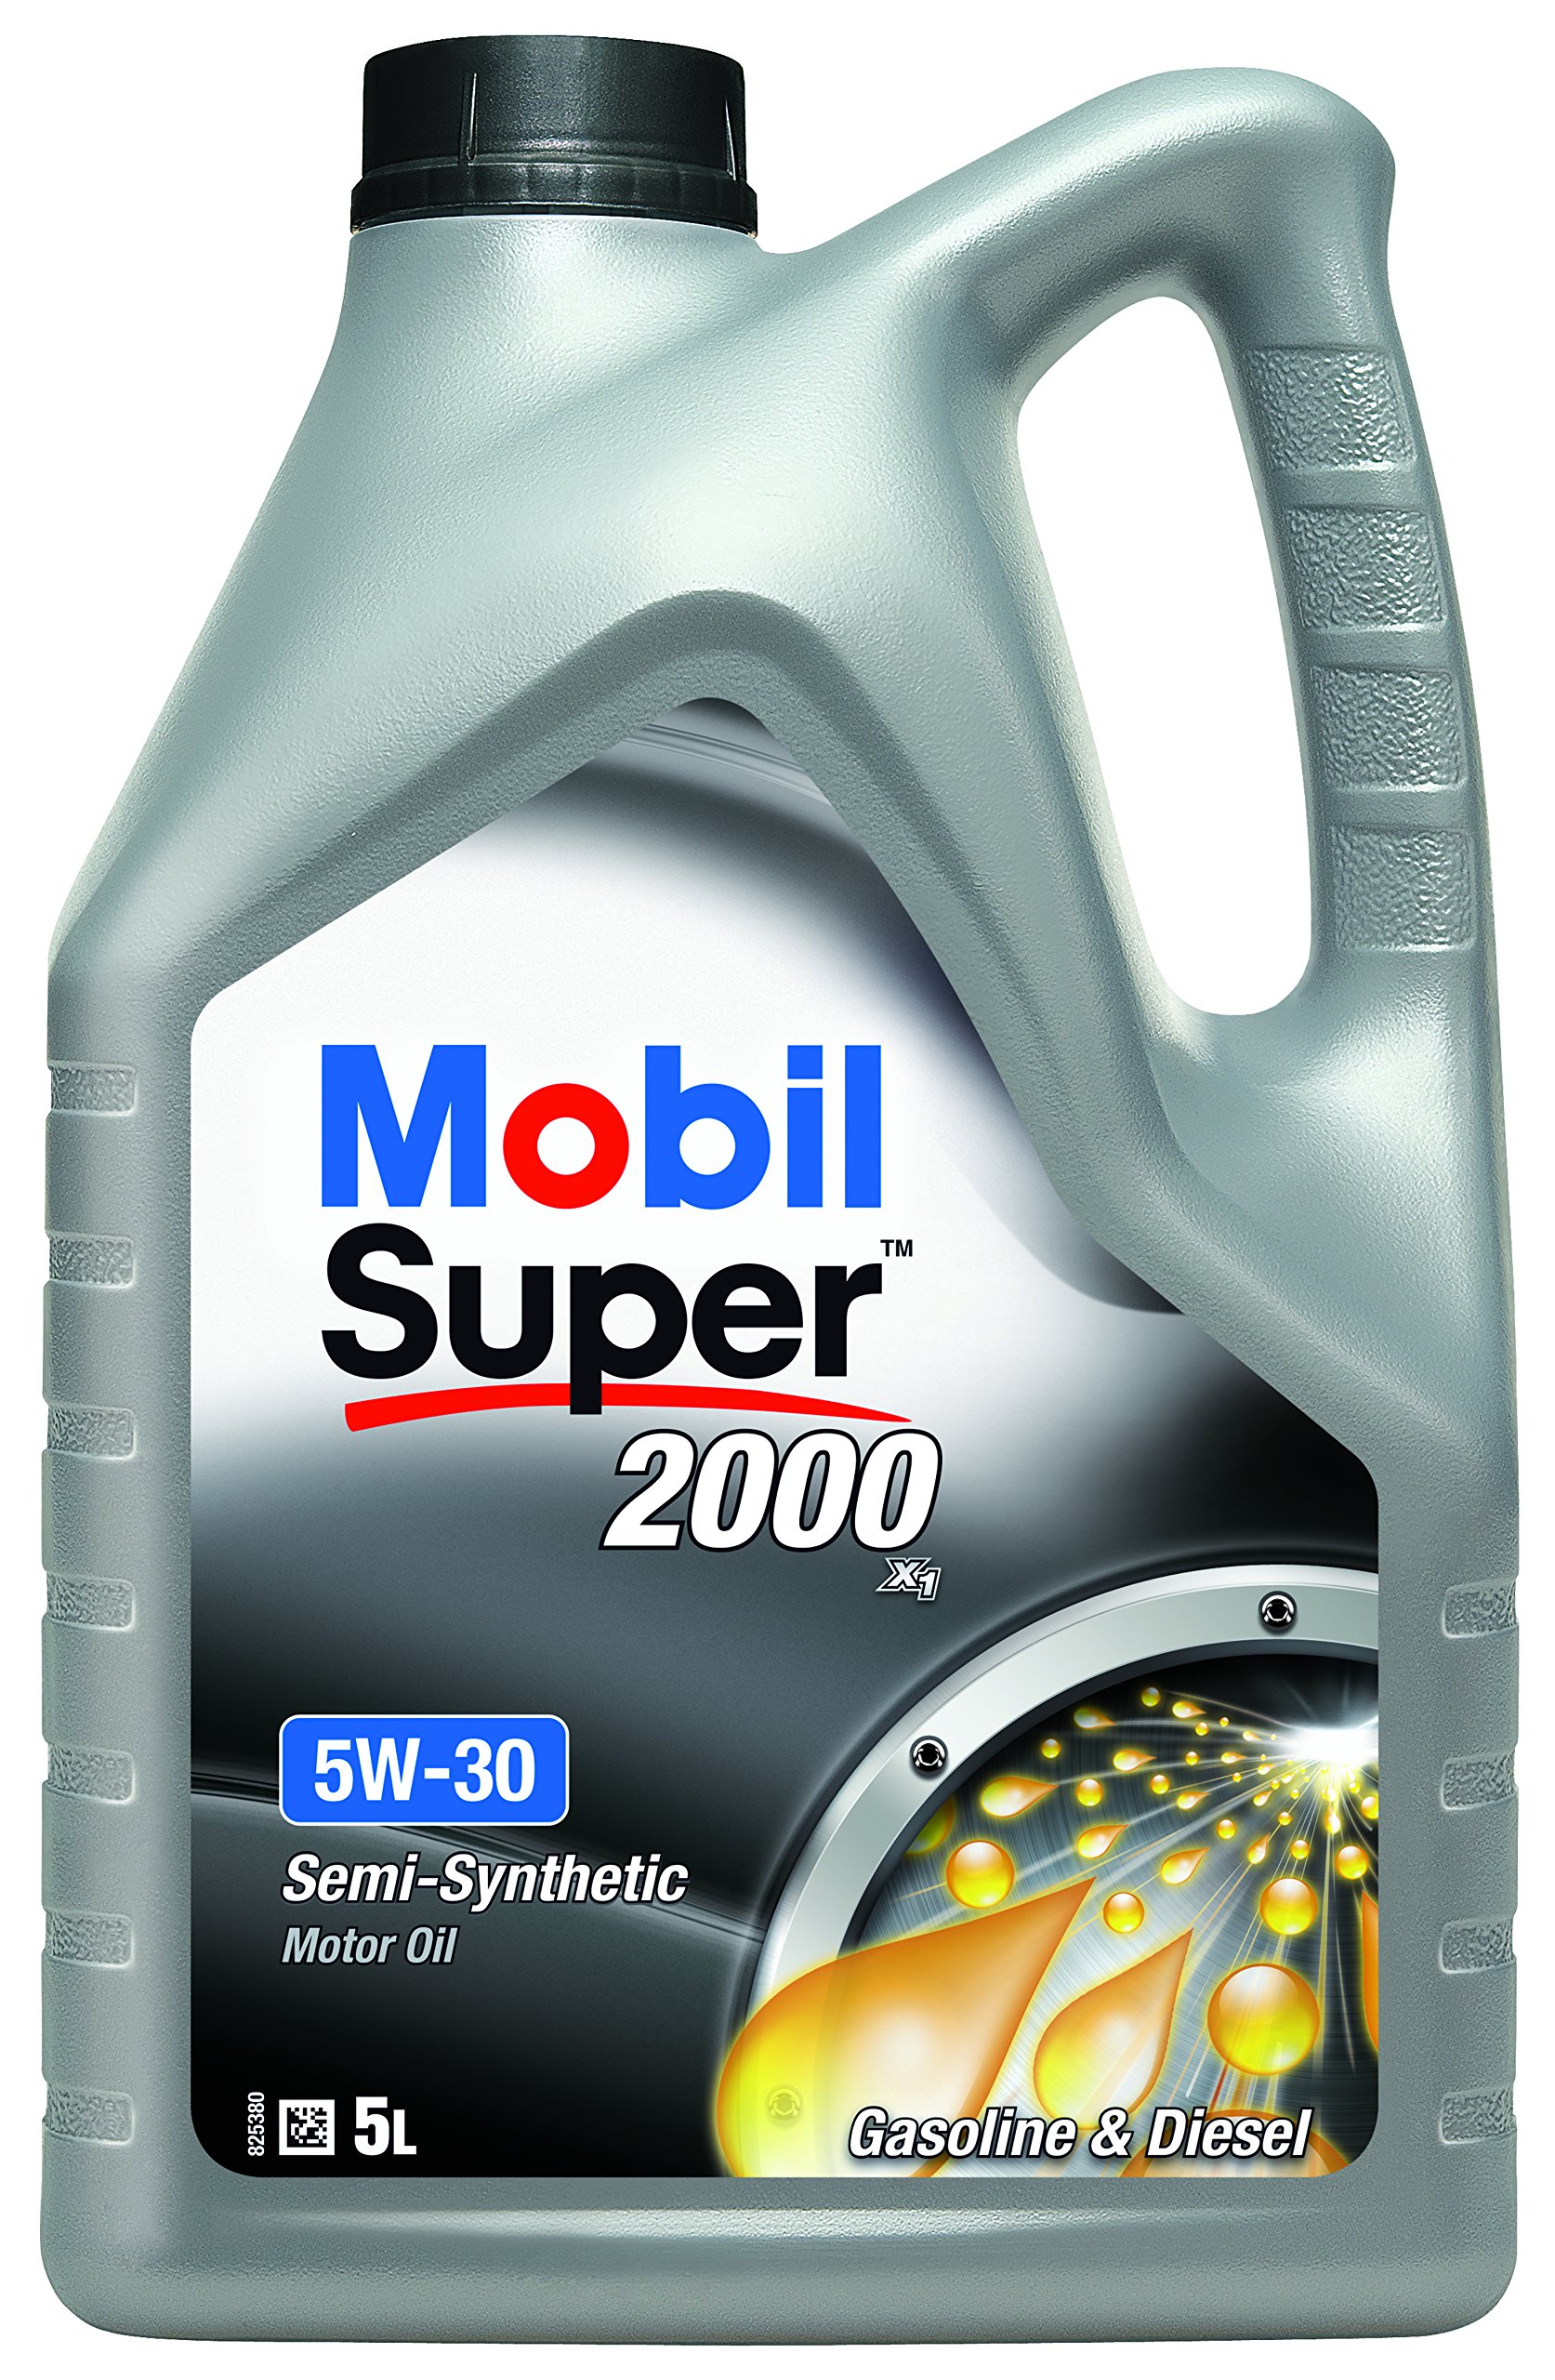 Mobil Super 2000 X1 5W-30 Engine Oil, 5L von Mobil